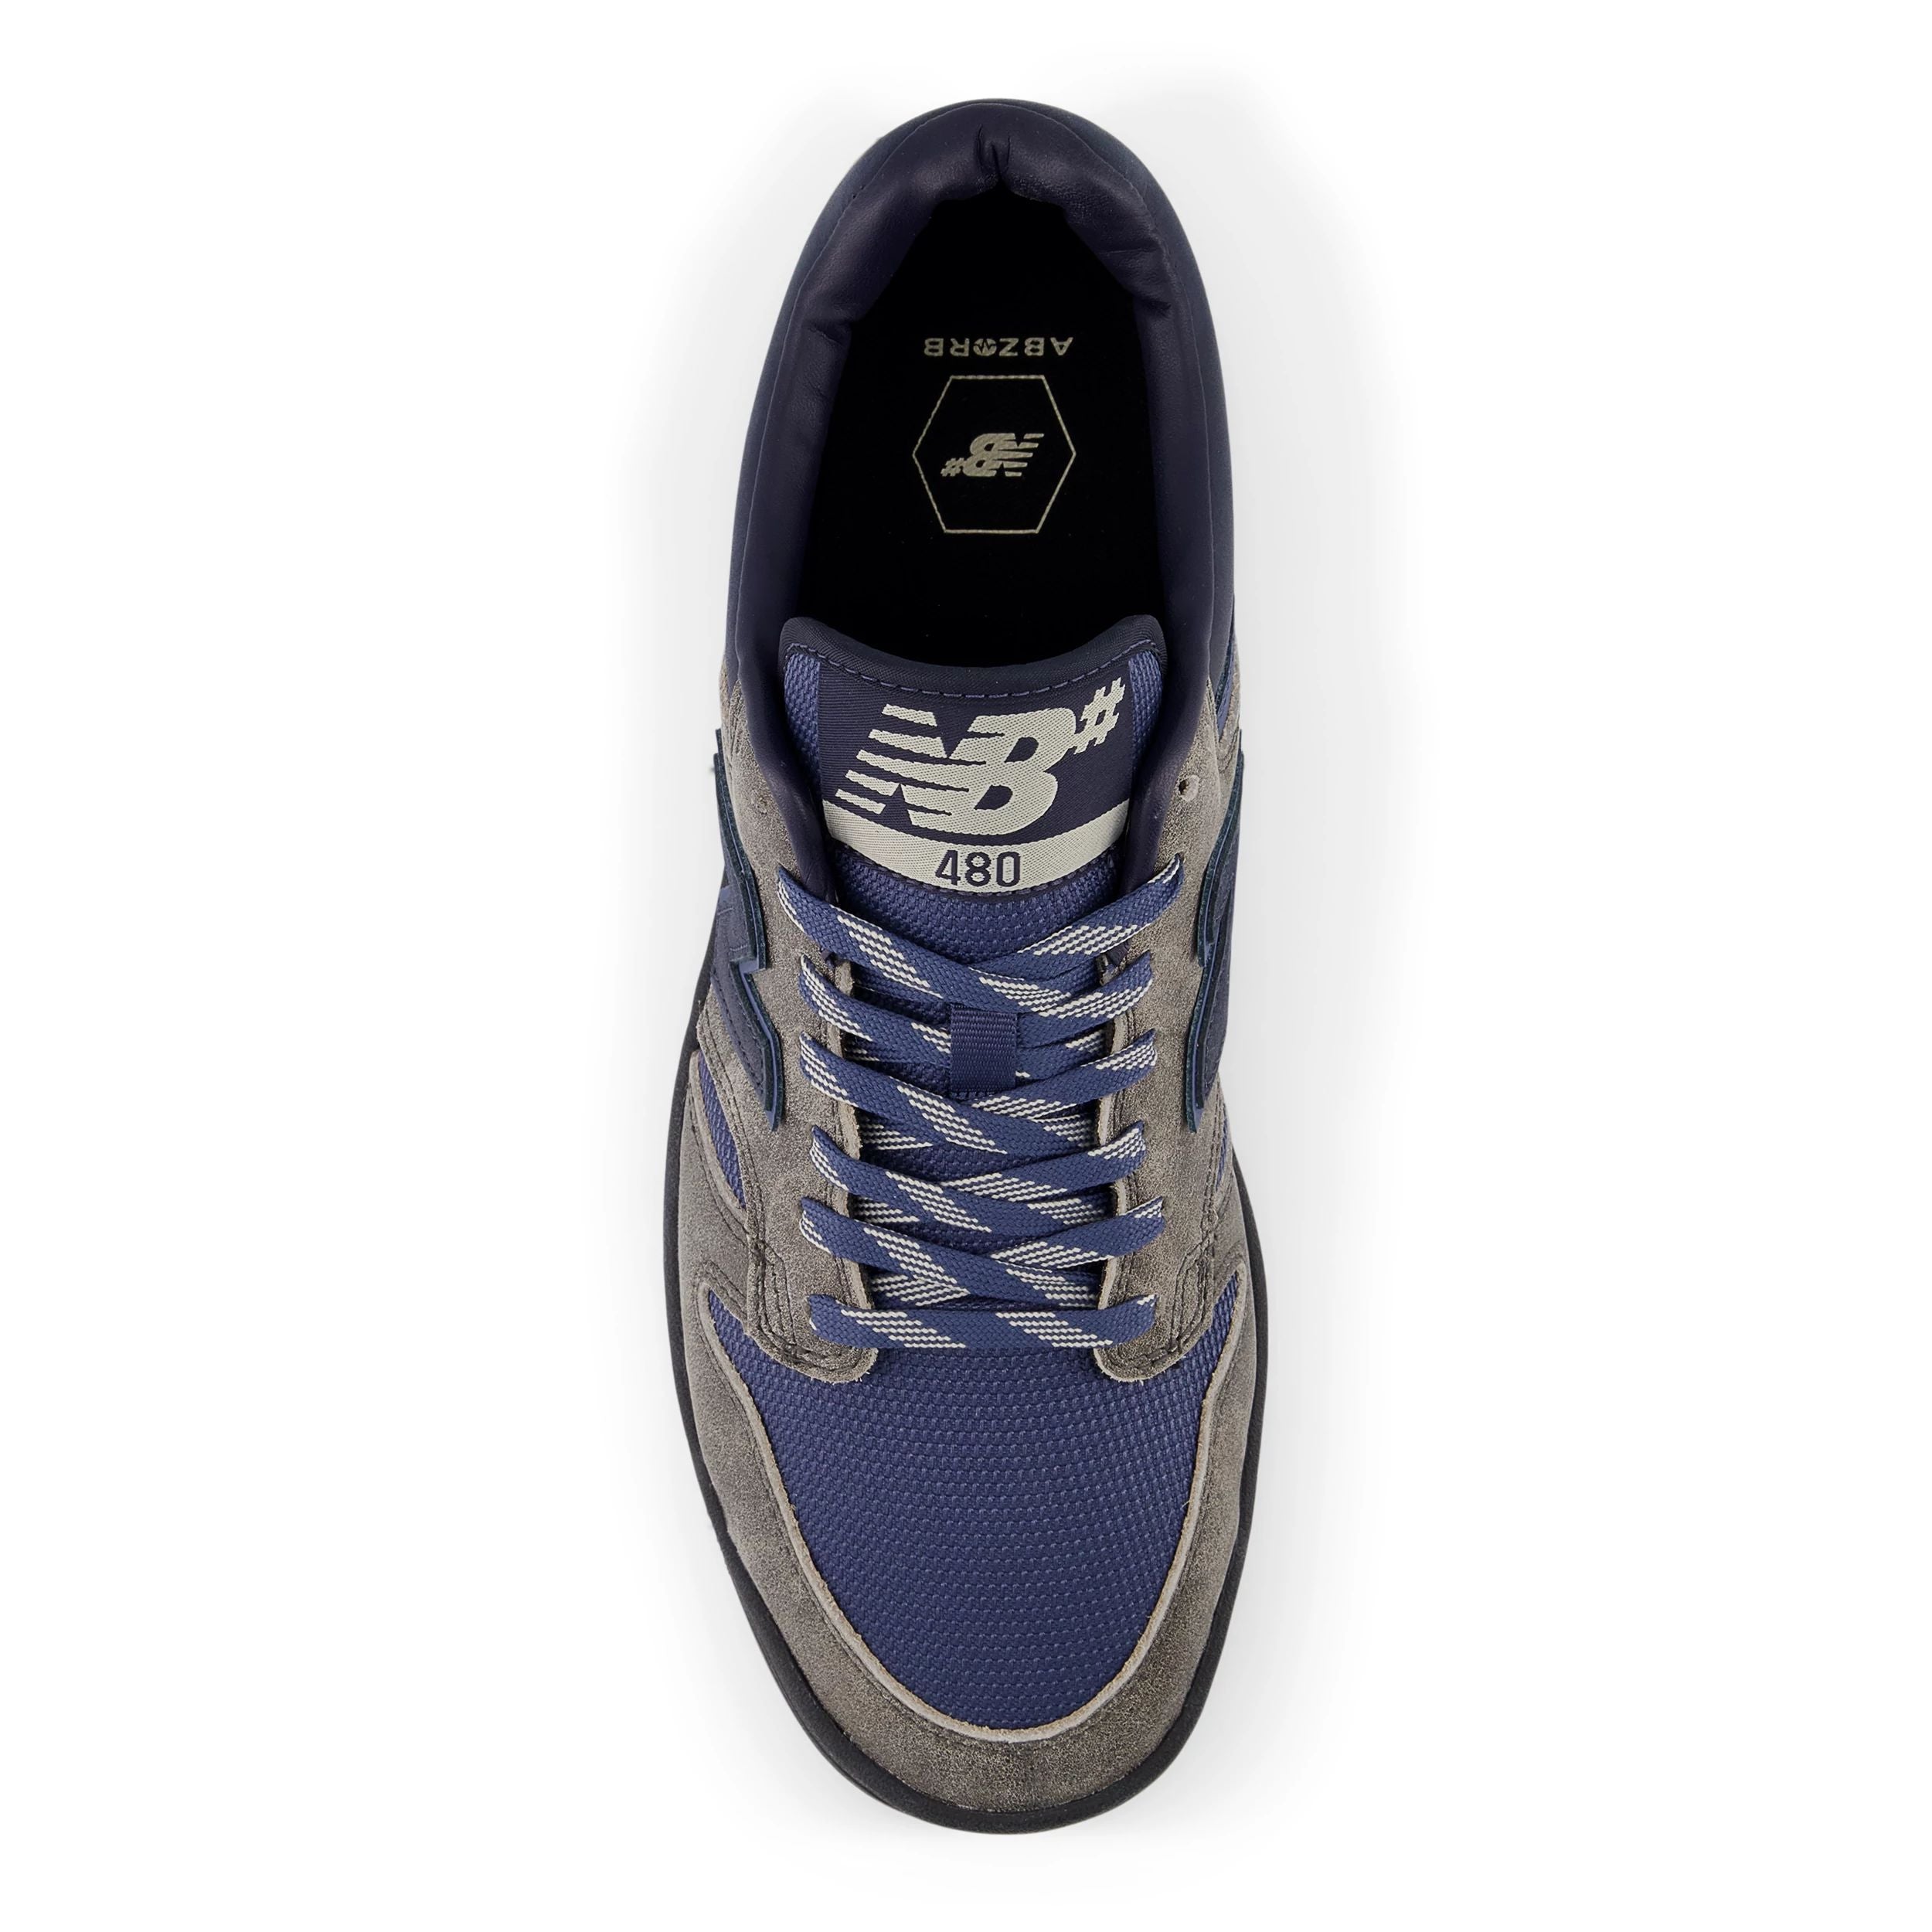 Blue/Grey NB Numeric 480 Skate Shoe Top